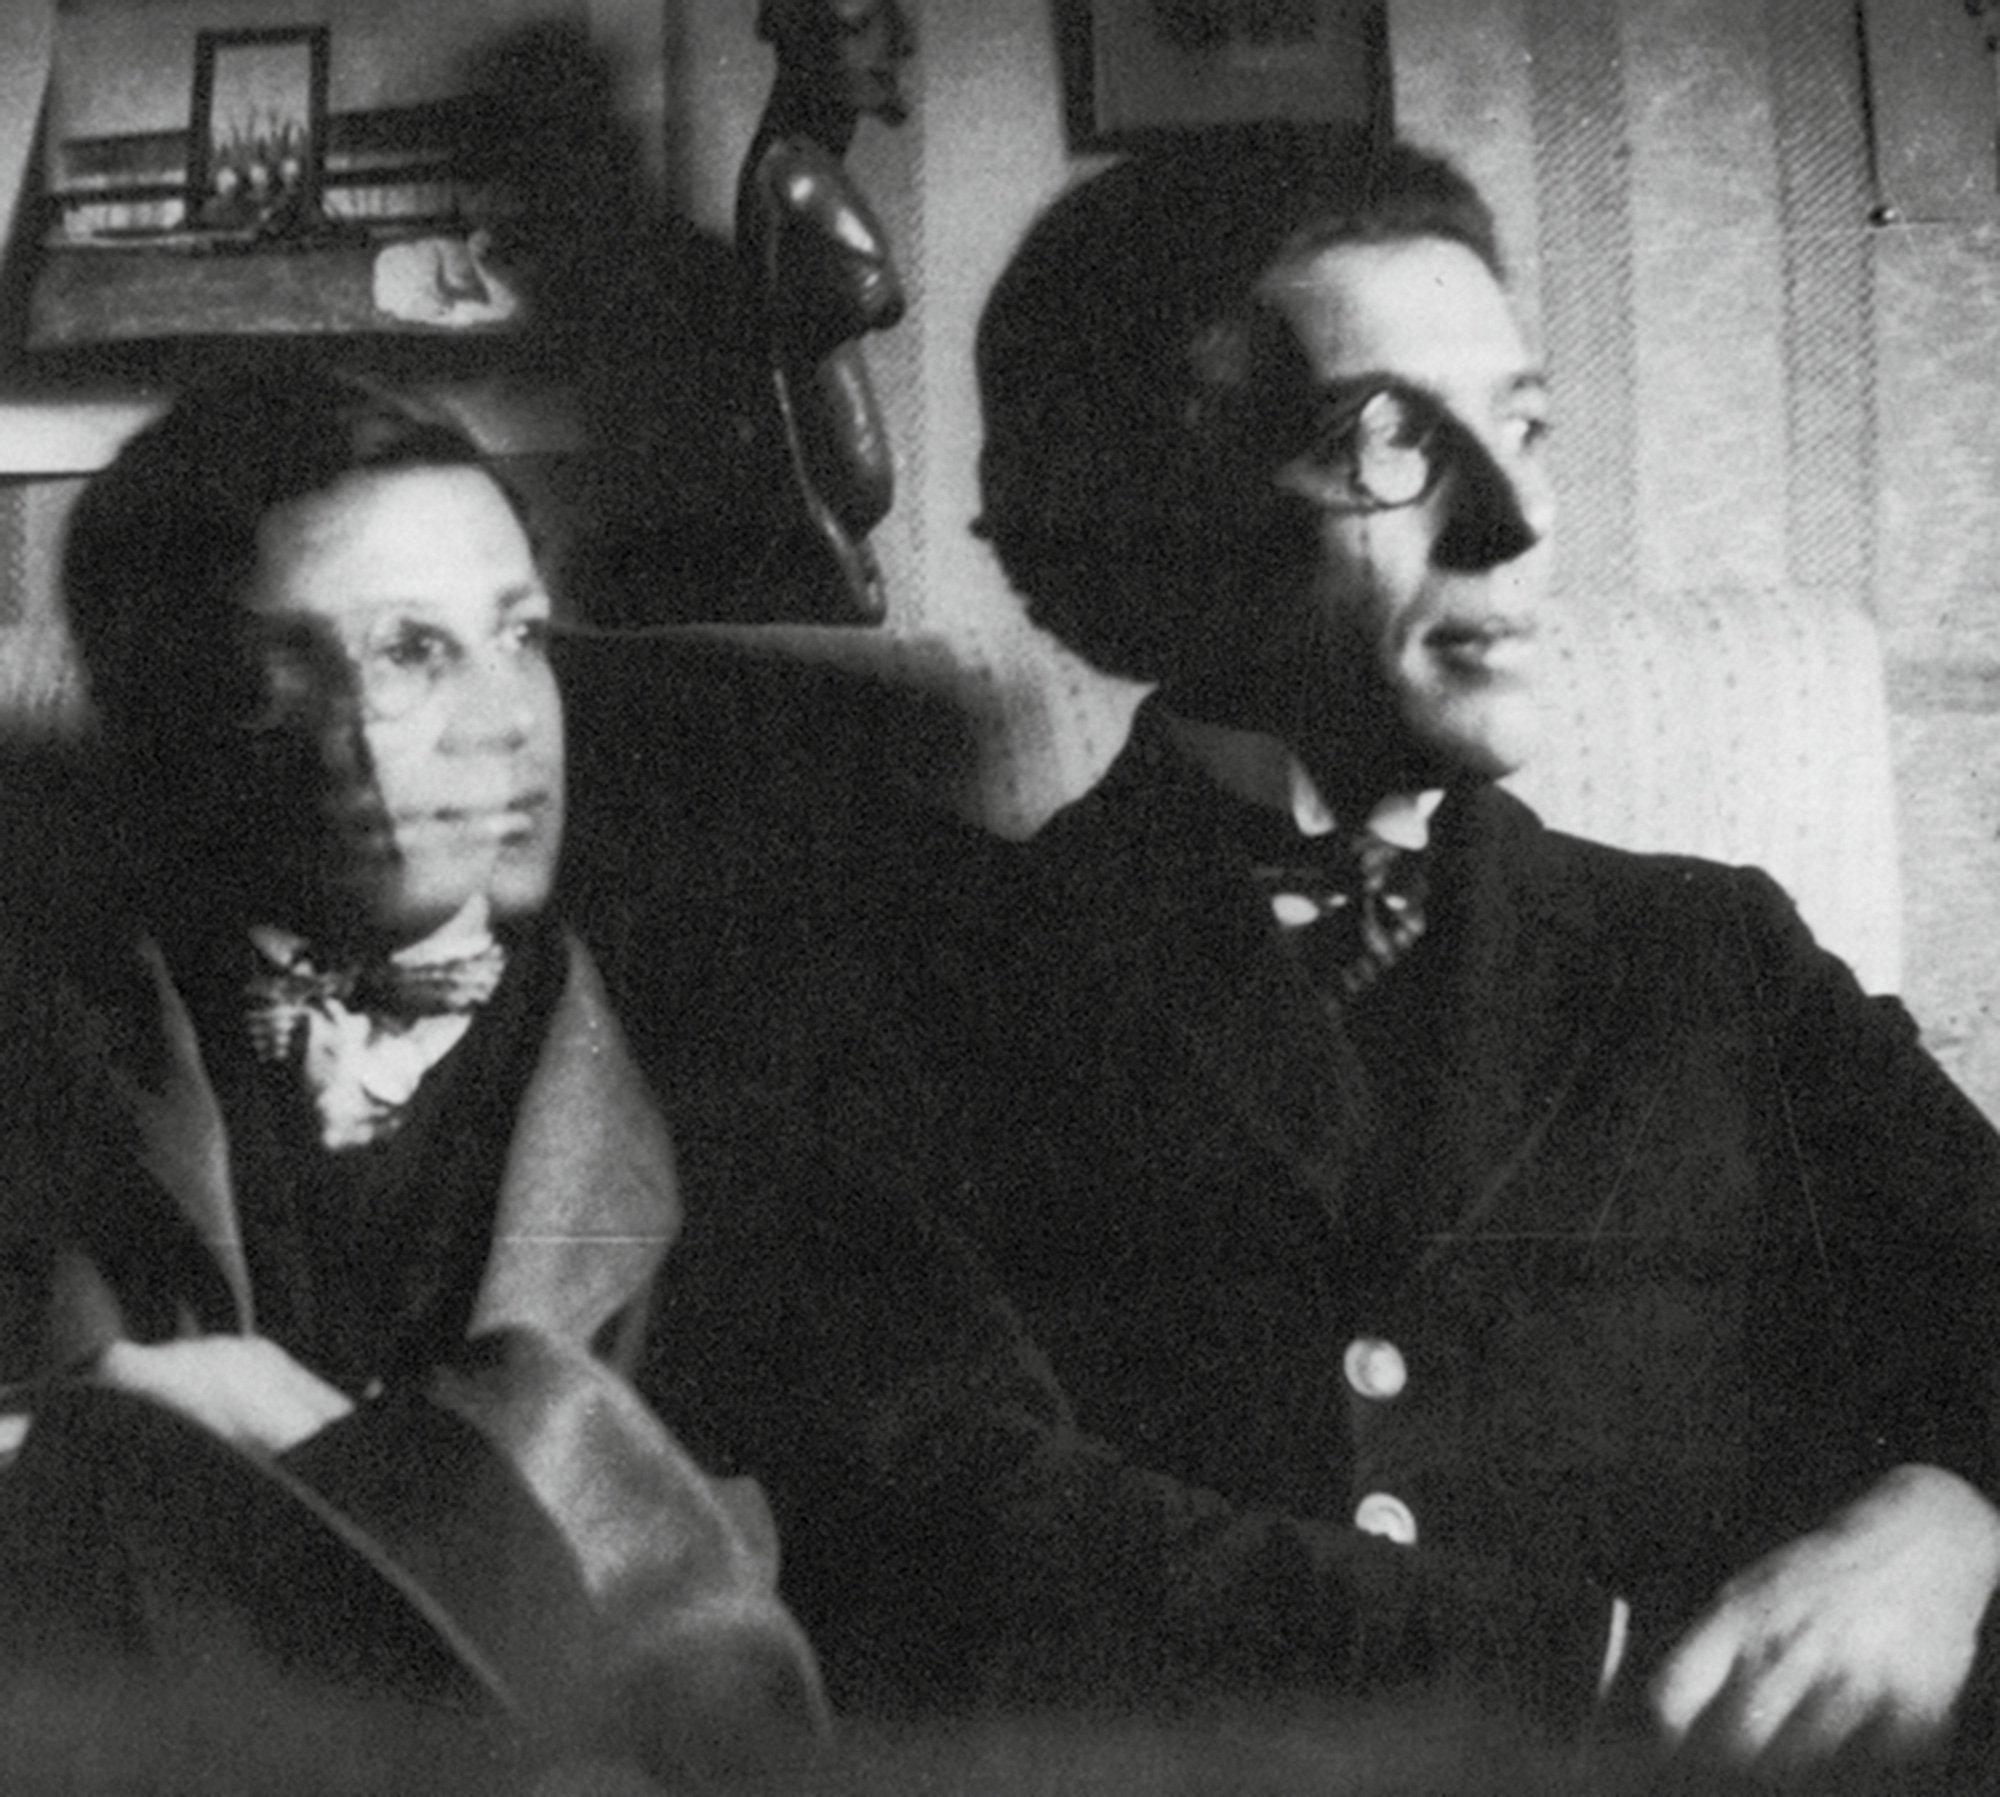 A circa nineteen twenty photograph of Tristan Tzara and André Breton,